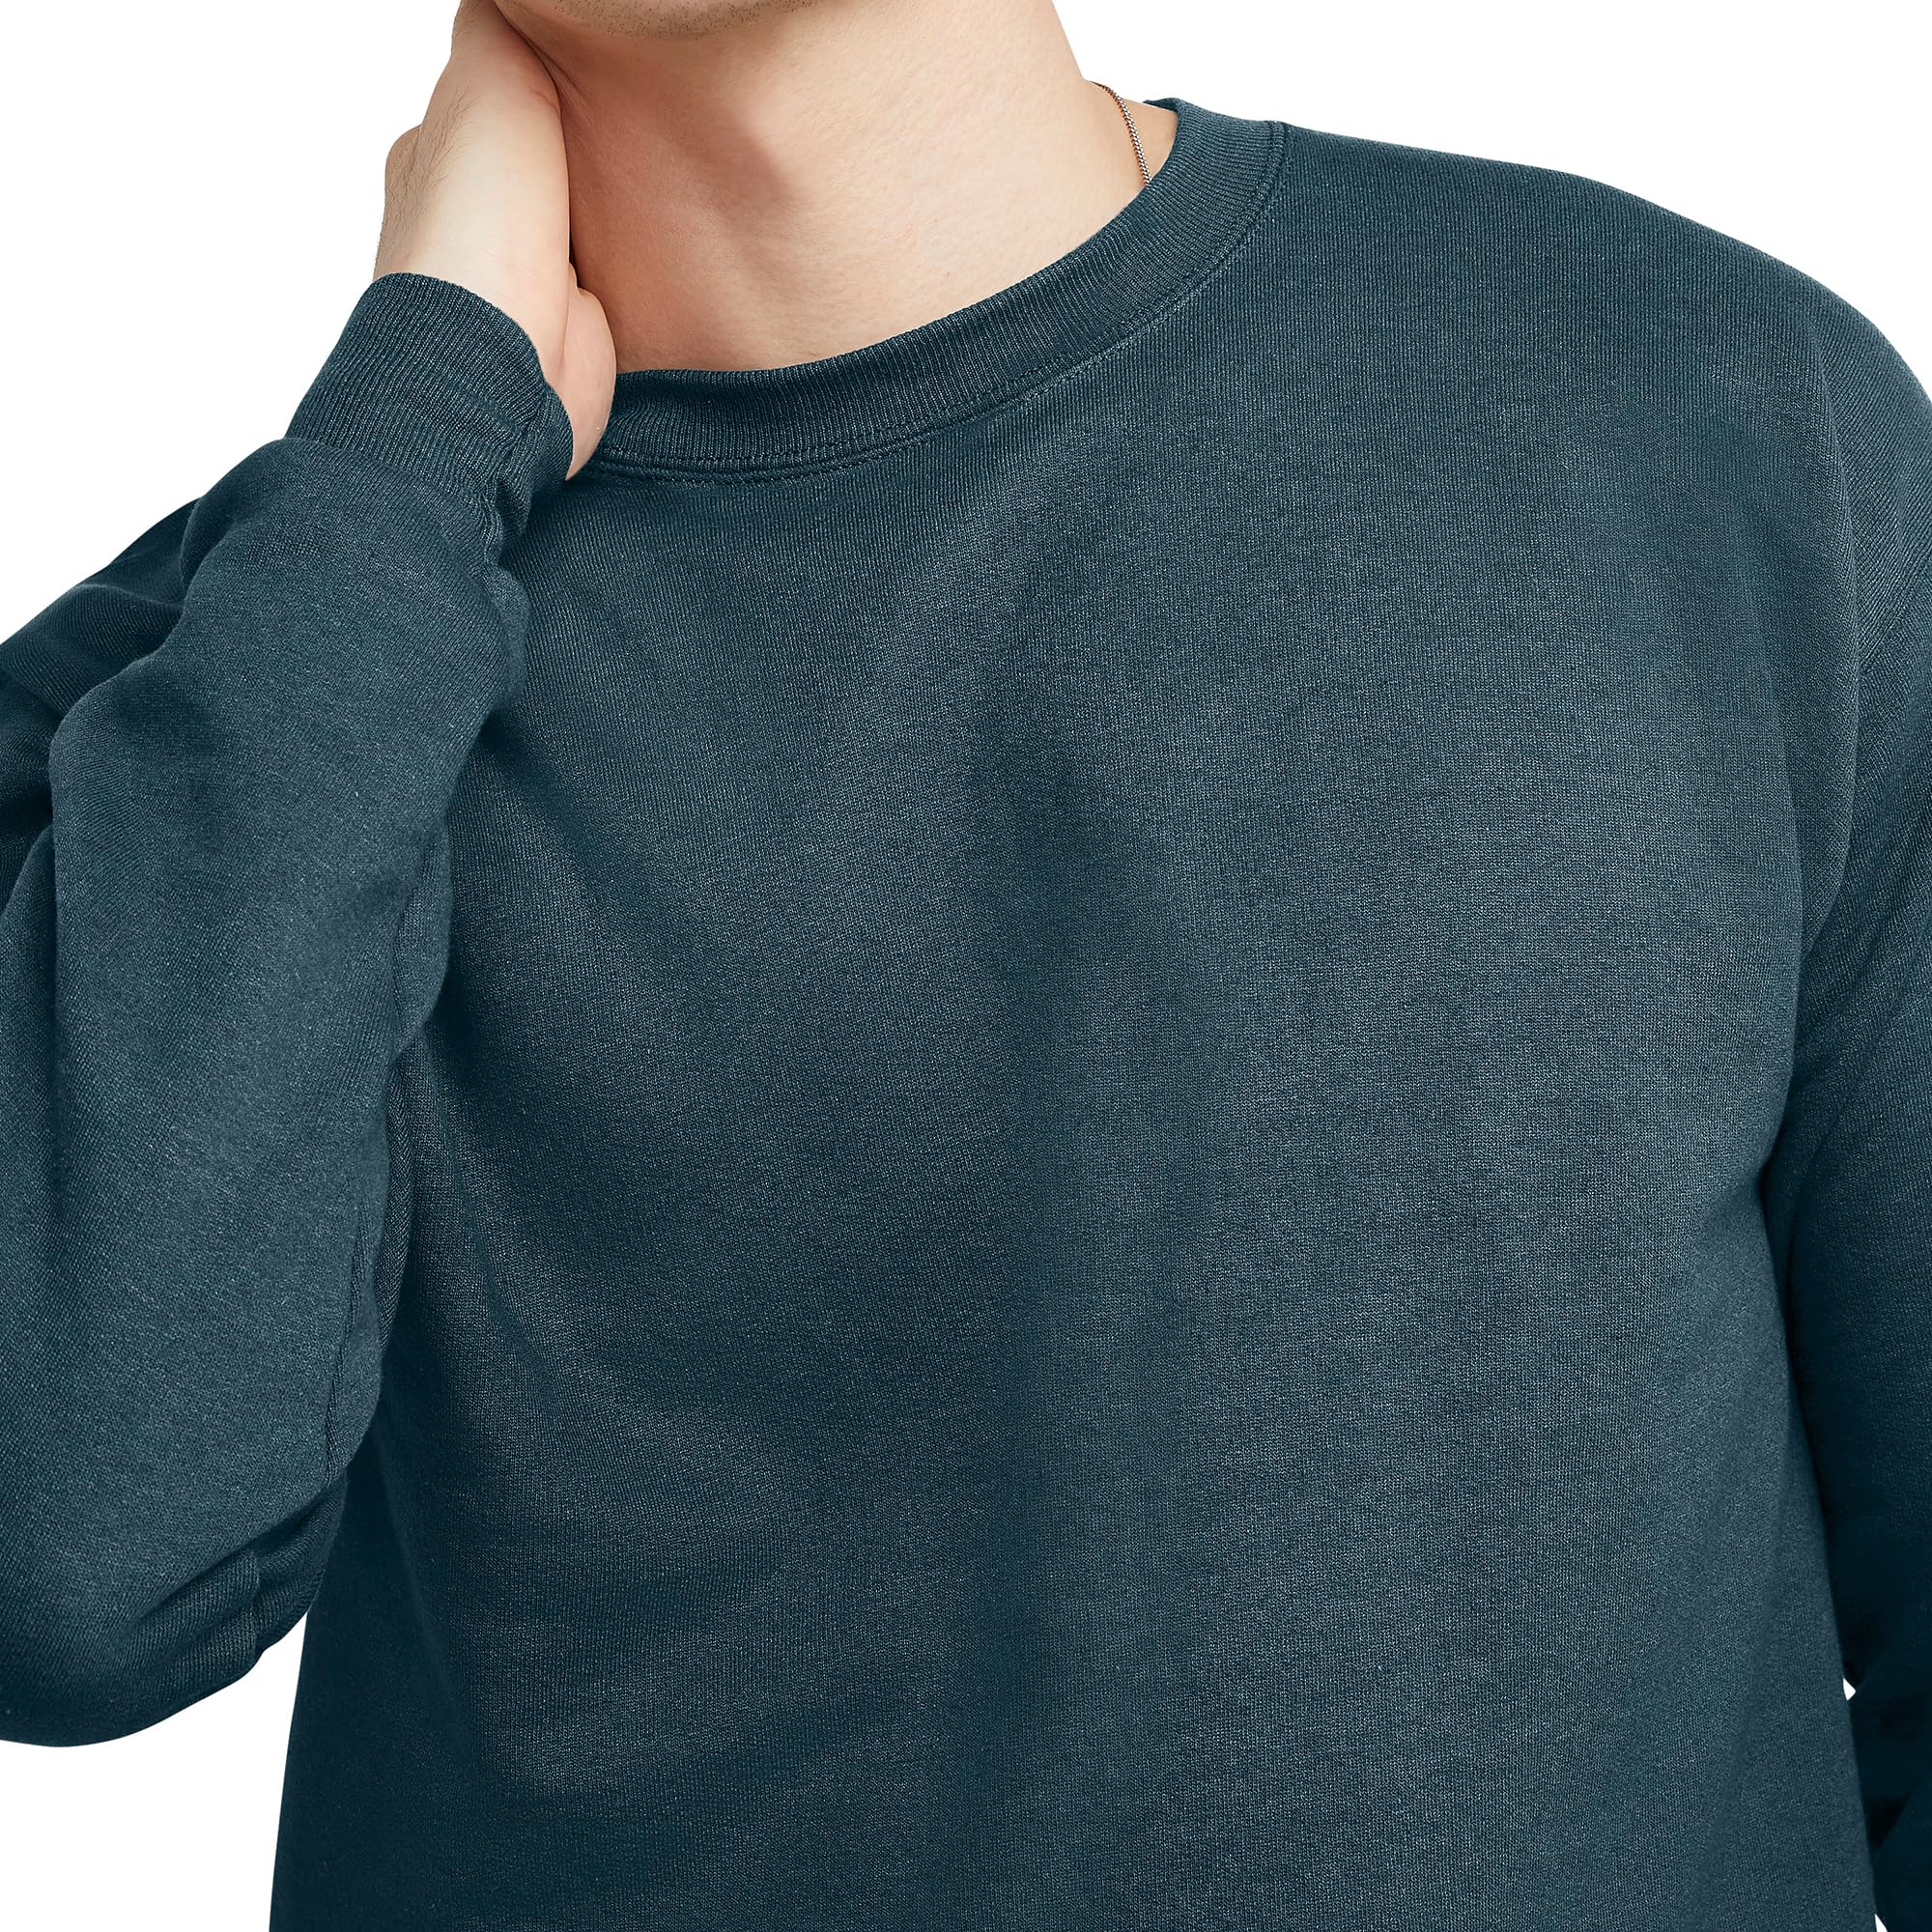 Hanes EcoSmart Fleece, Cotton-Blend Pullover, Crewneck Sweatshirt for Men (1 Or 2 Pack)